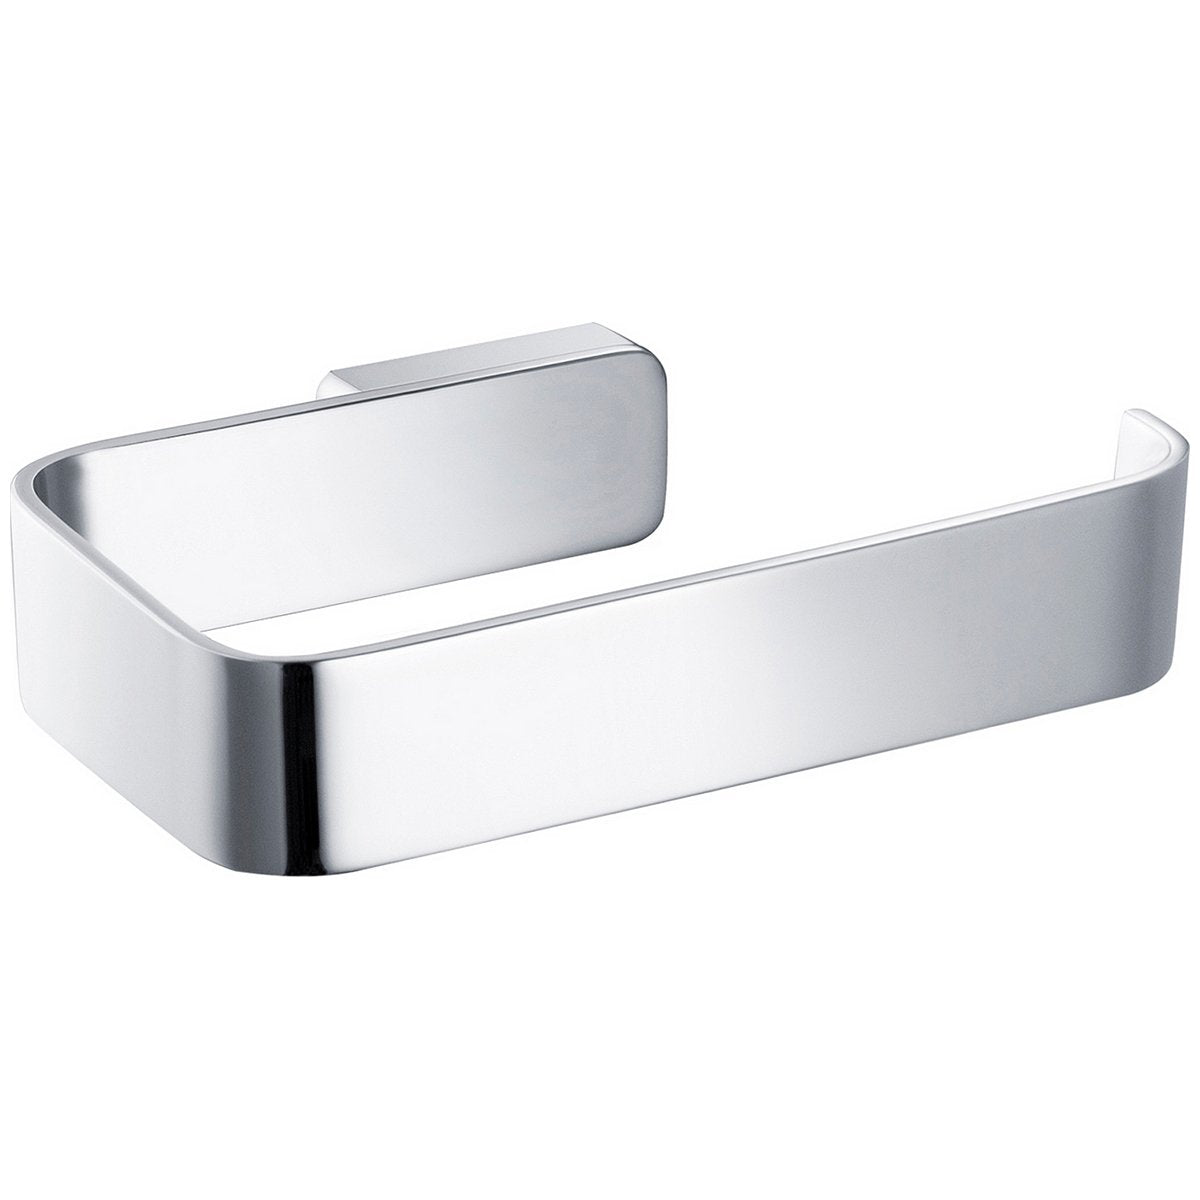 Solid Stainless Steel Designer Bathroom Accessories Bathroom